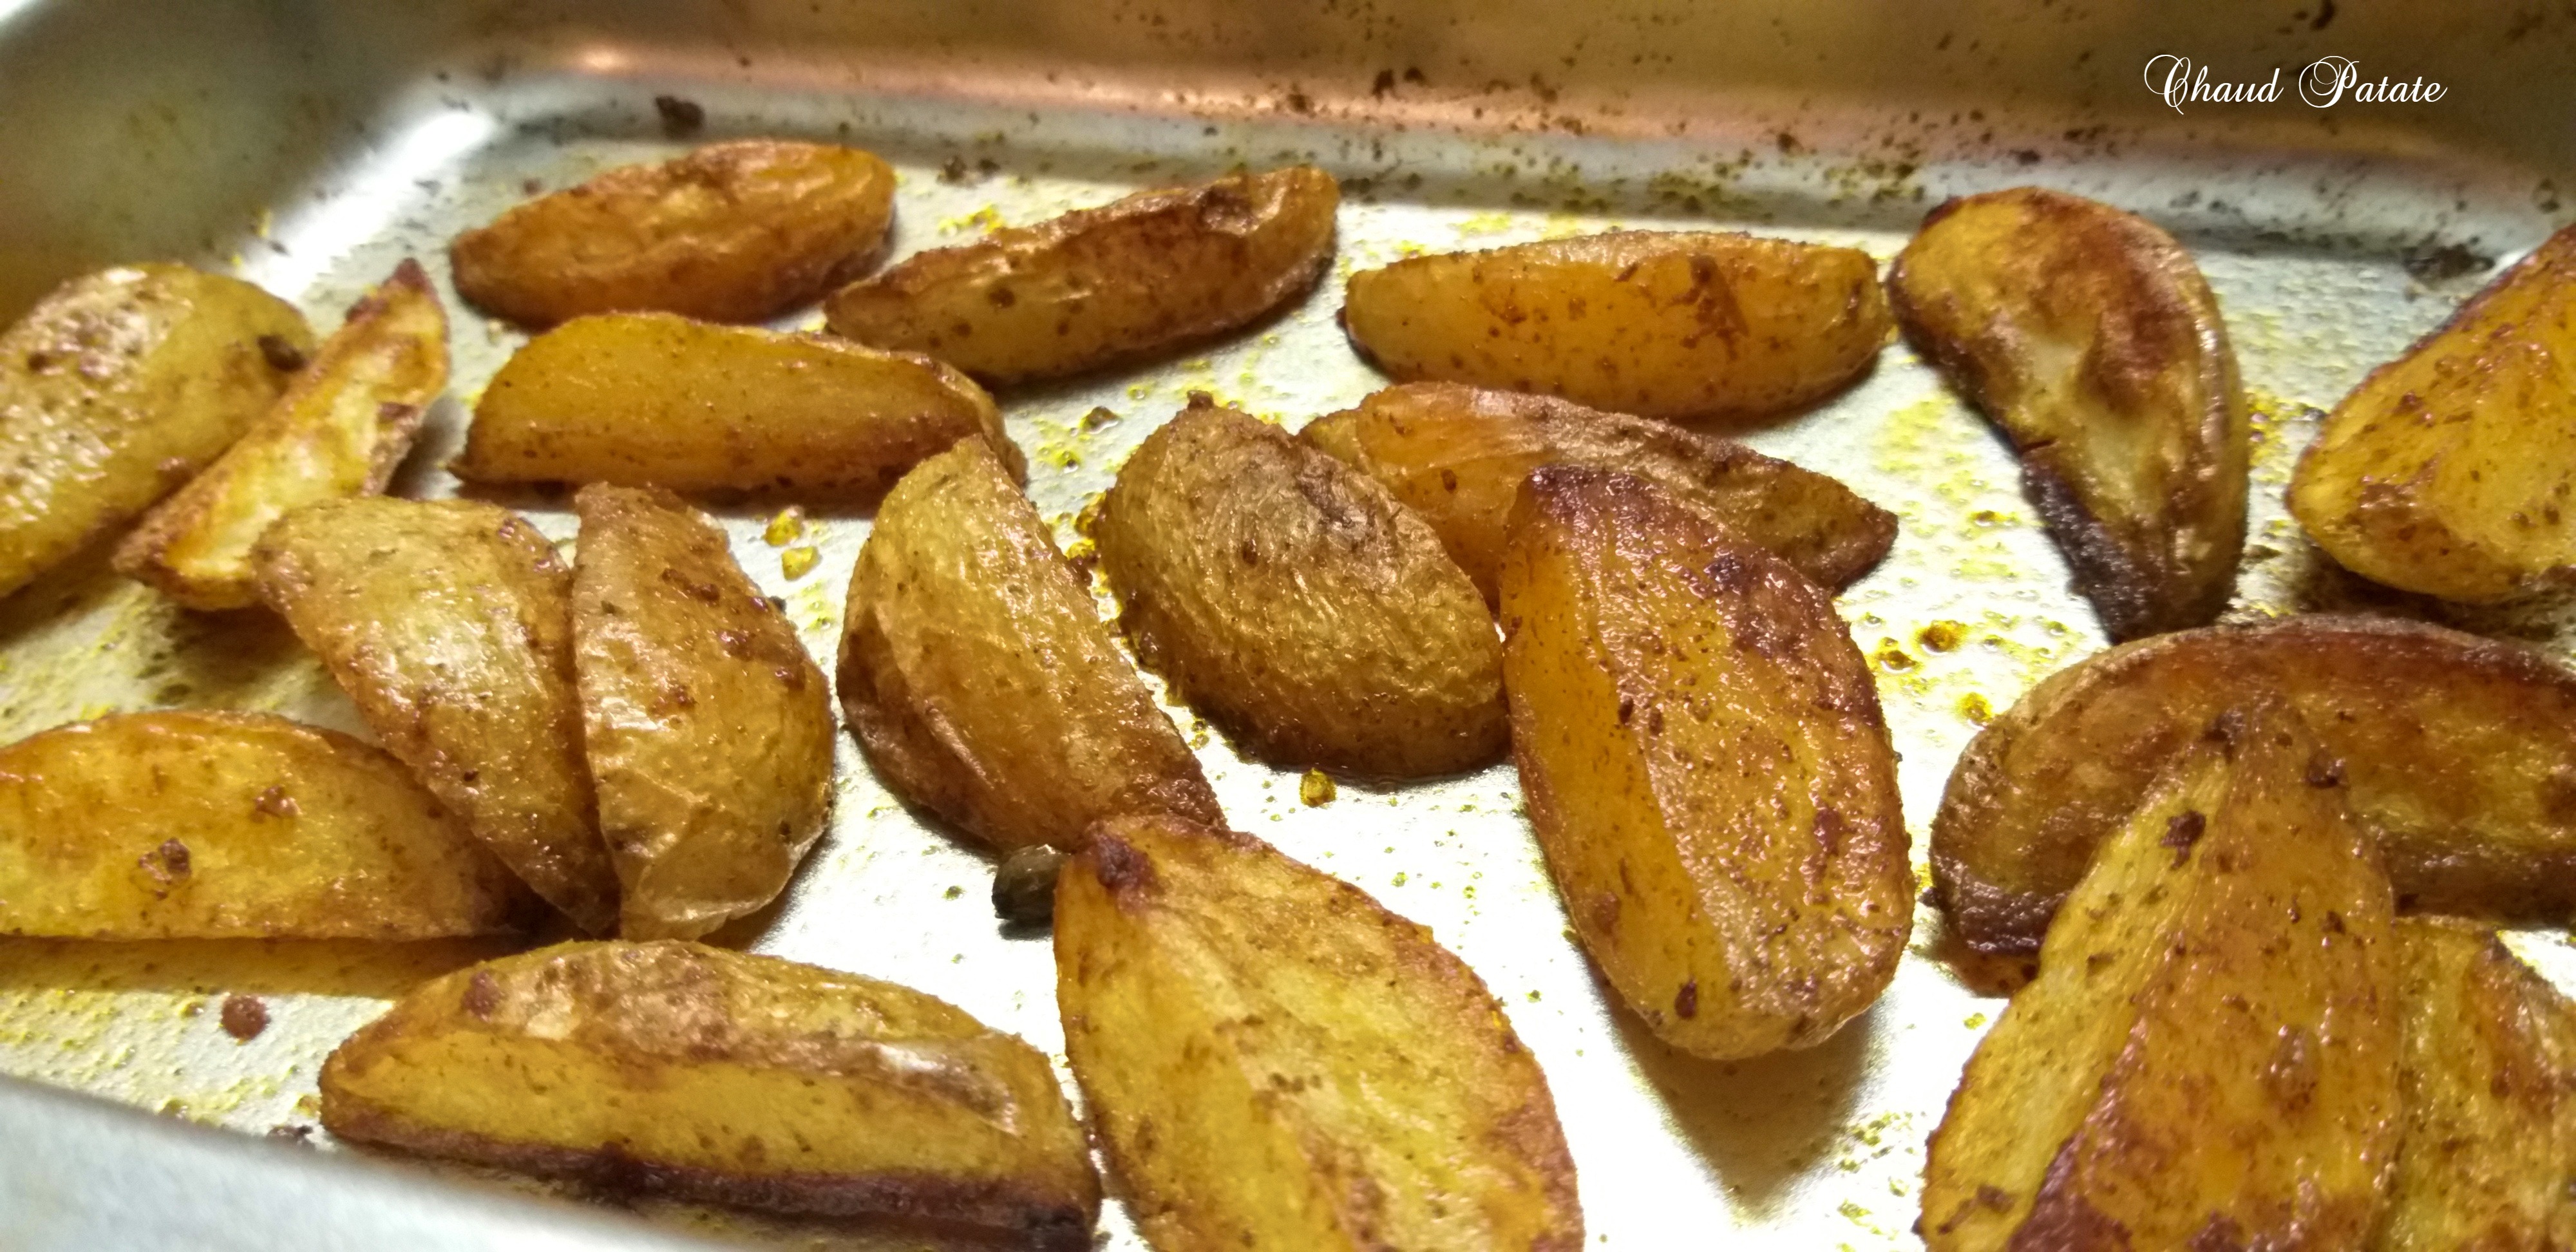 patate rustique chaud patate 02